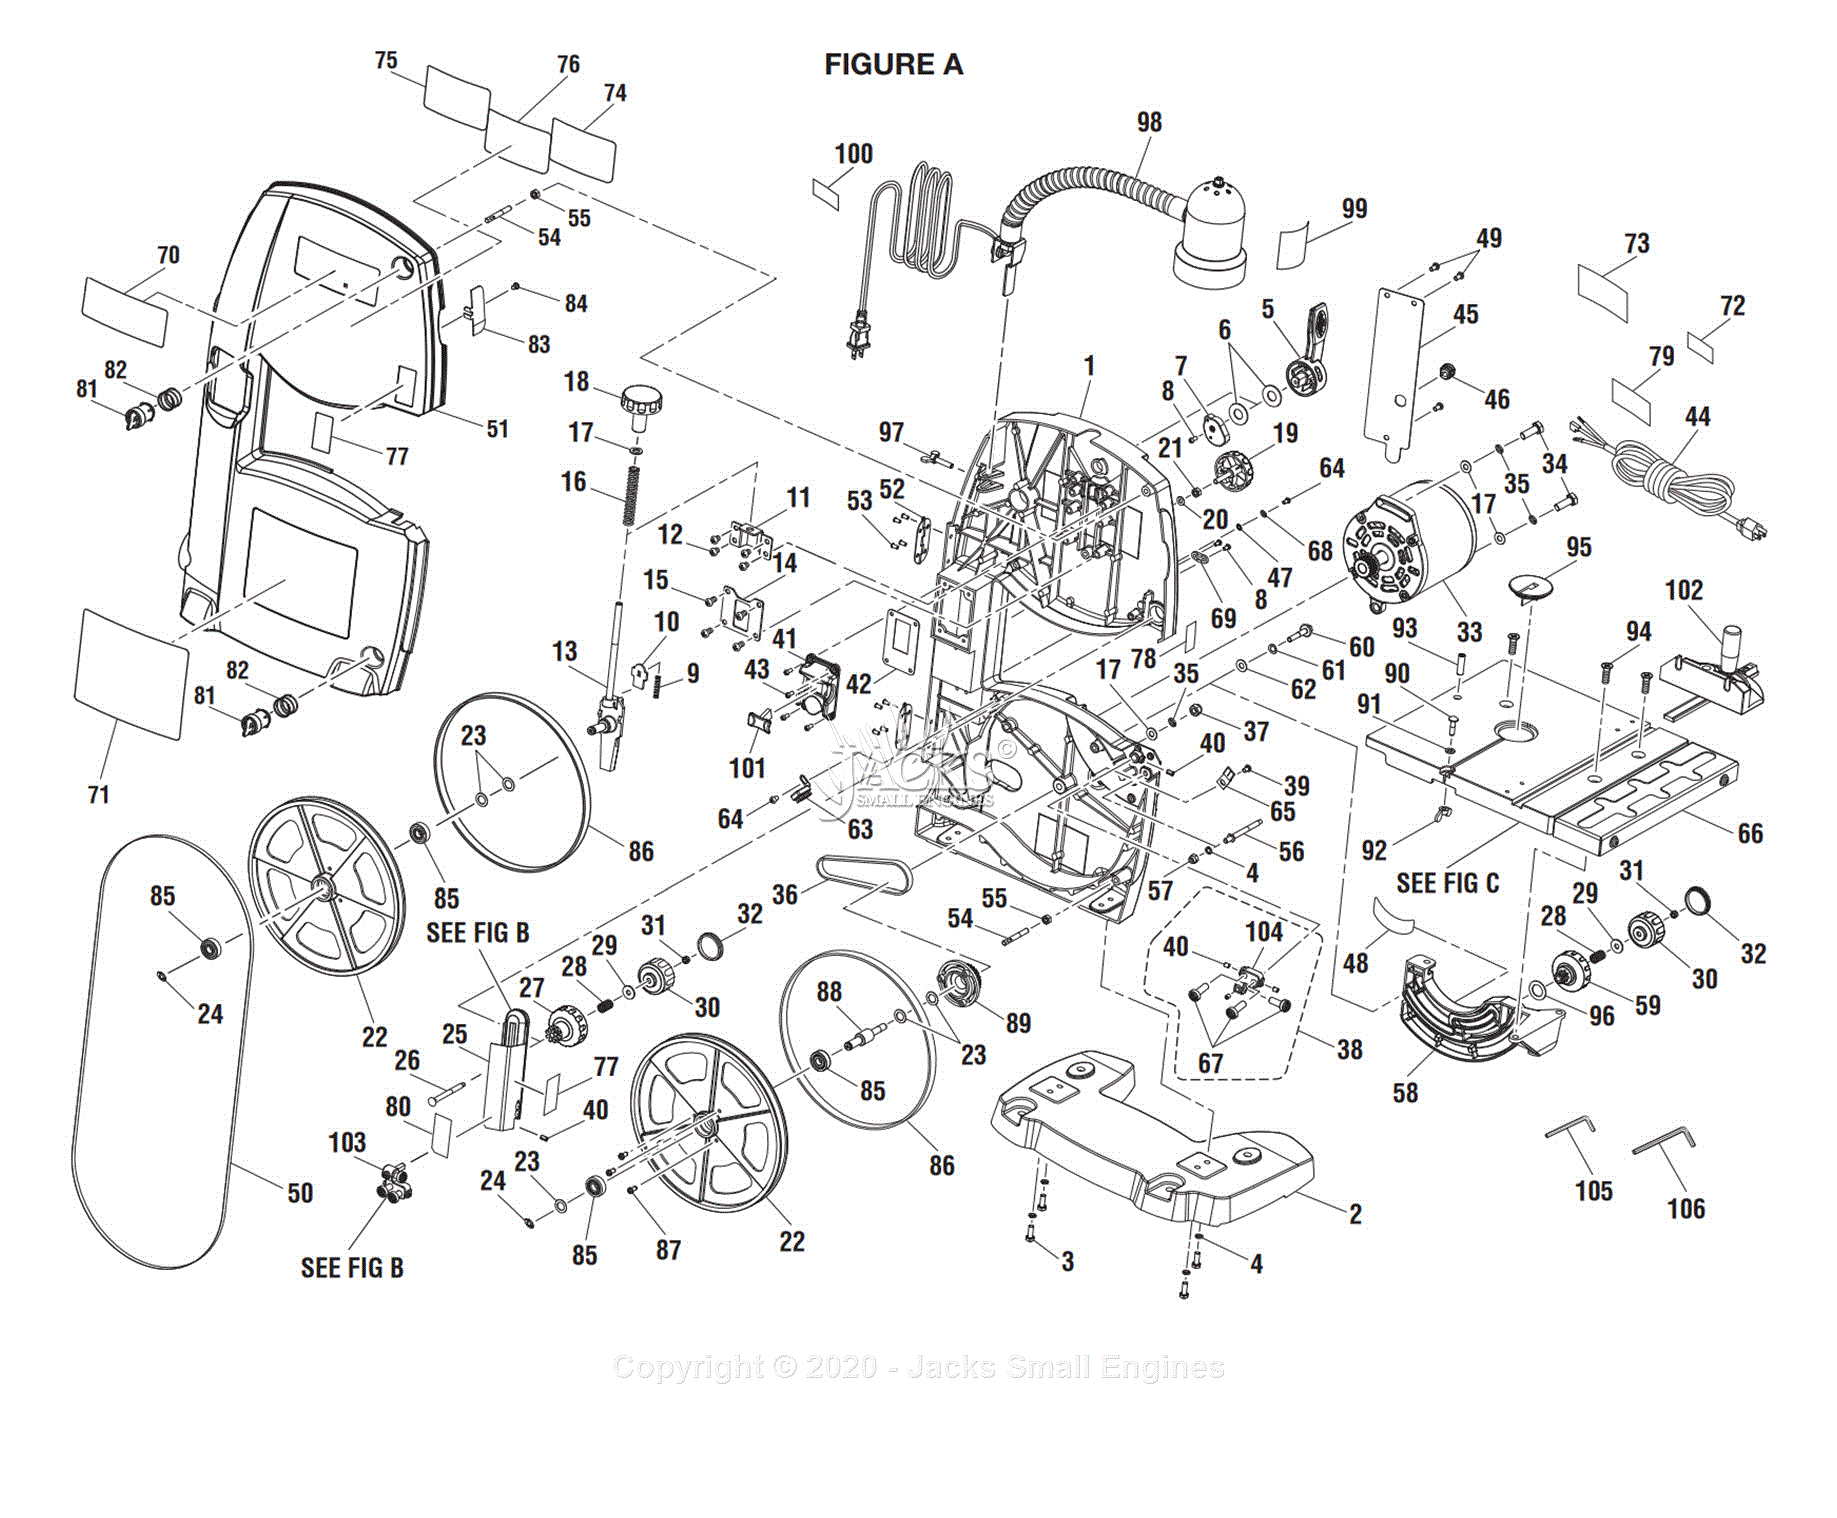 Ryobi Bs903 Parts Diagram For Figure A